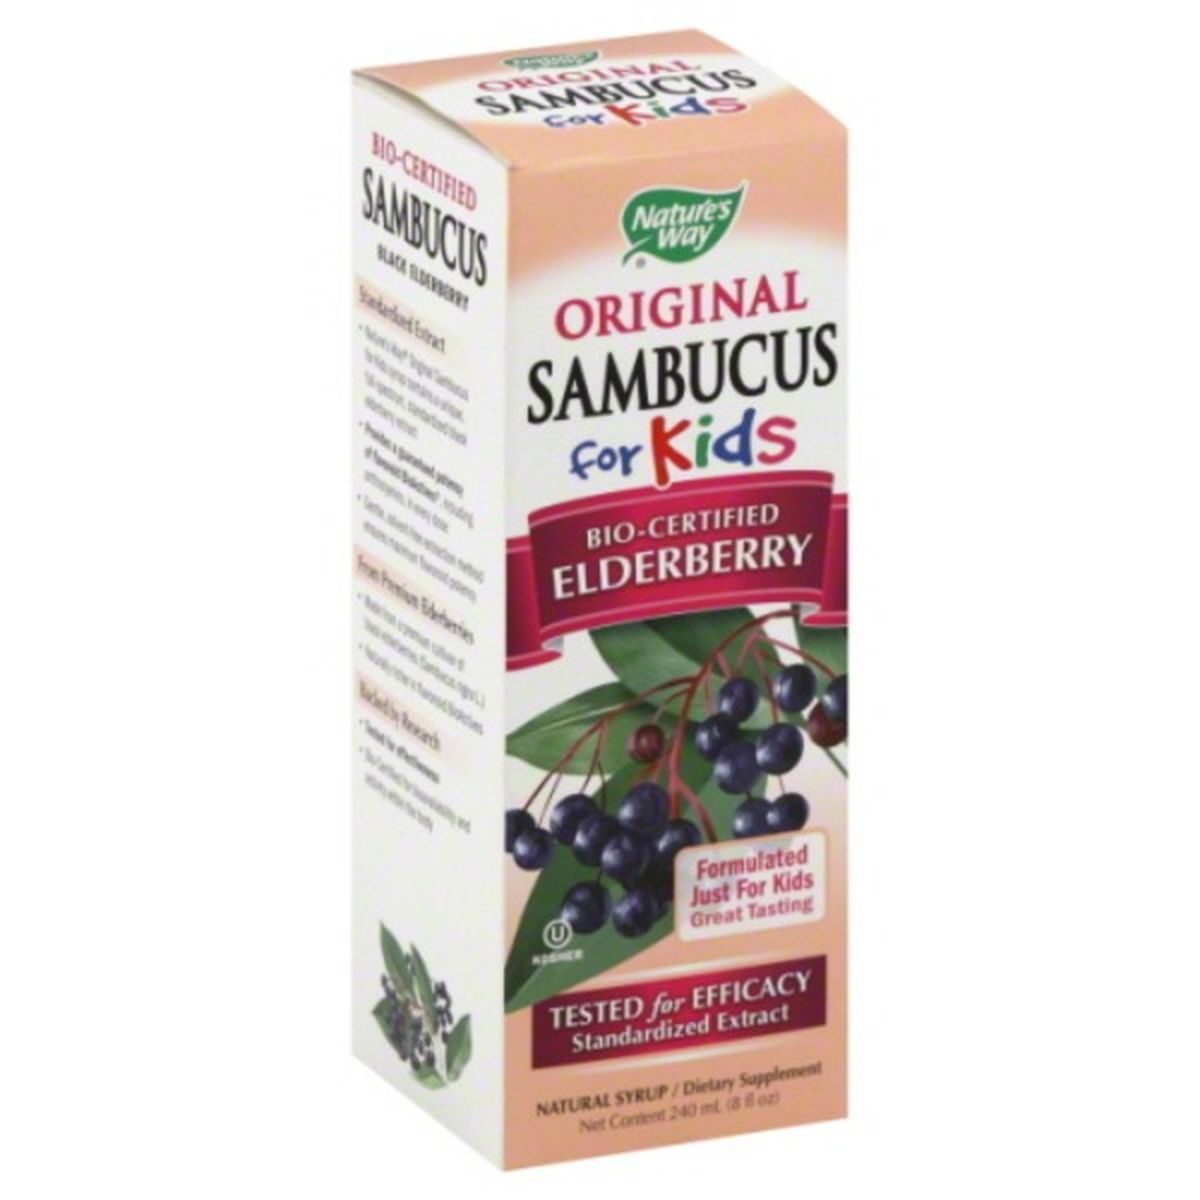 Calories in Nature's Way Sambucus, for Kids, Original, Bio-Certified Elderberry, Natural Syrup